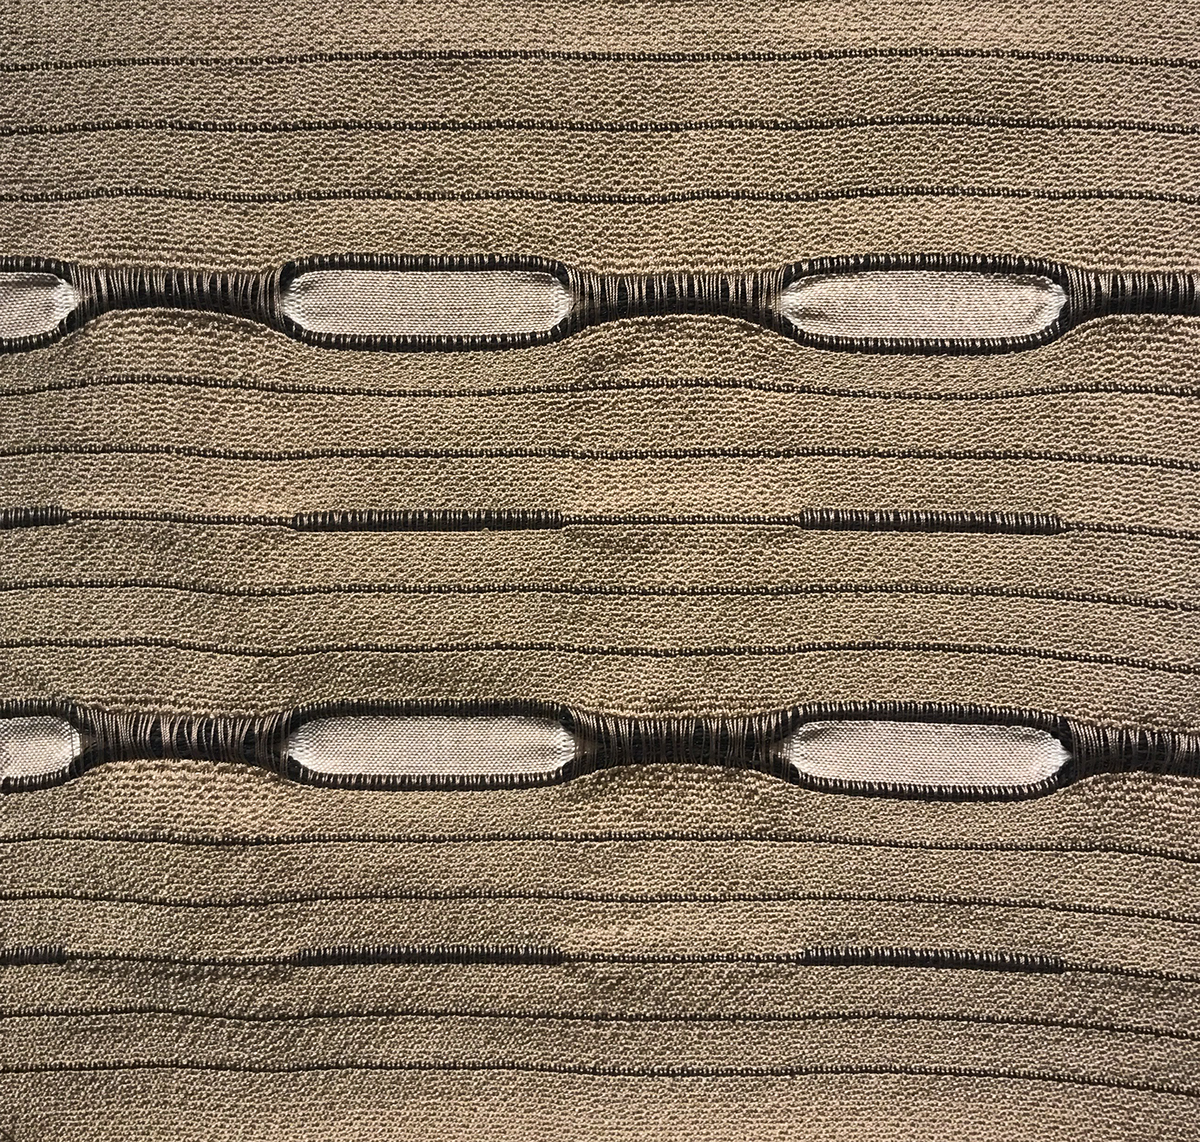 handwoven Woven textile fabric cloth design pattern weaving